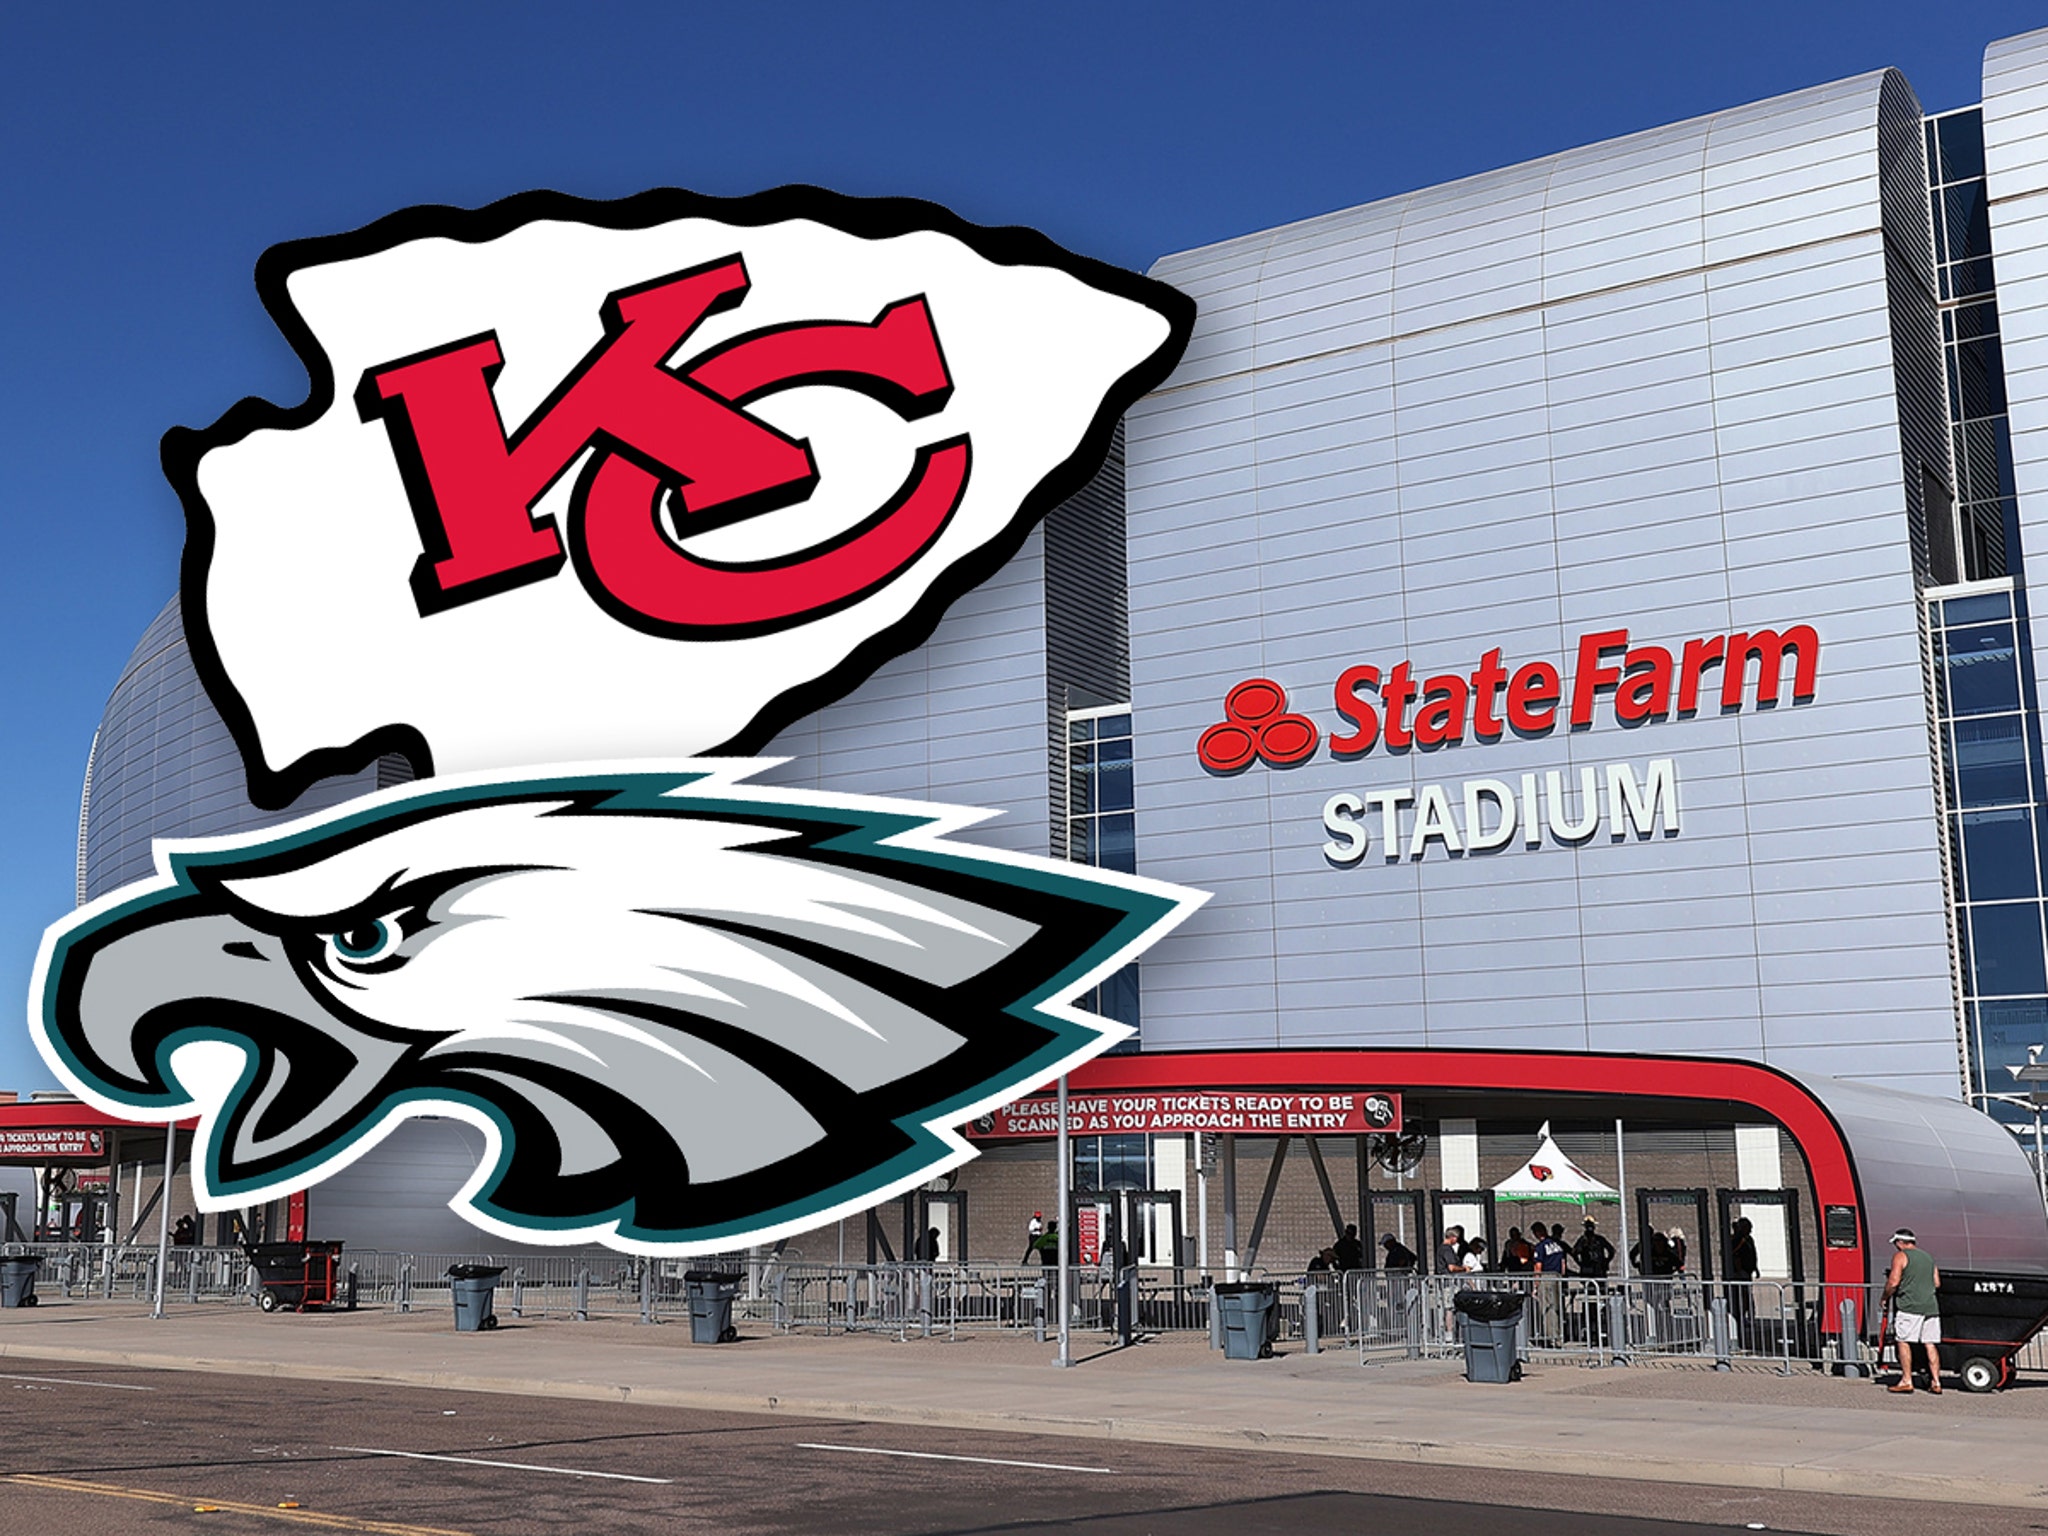 SLHS students anticipate Philadelphia Eagles' performance in The Super Bowl  – The Spotlight